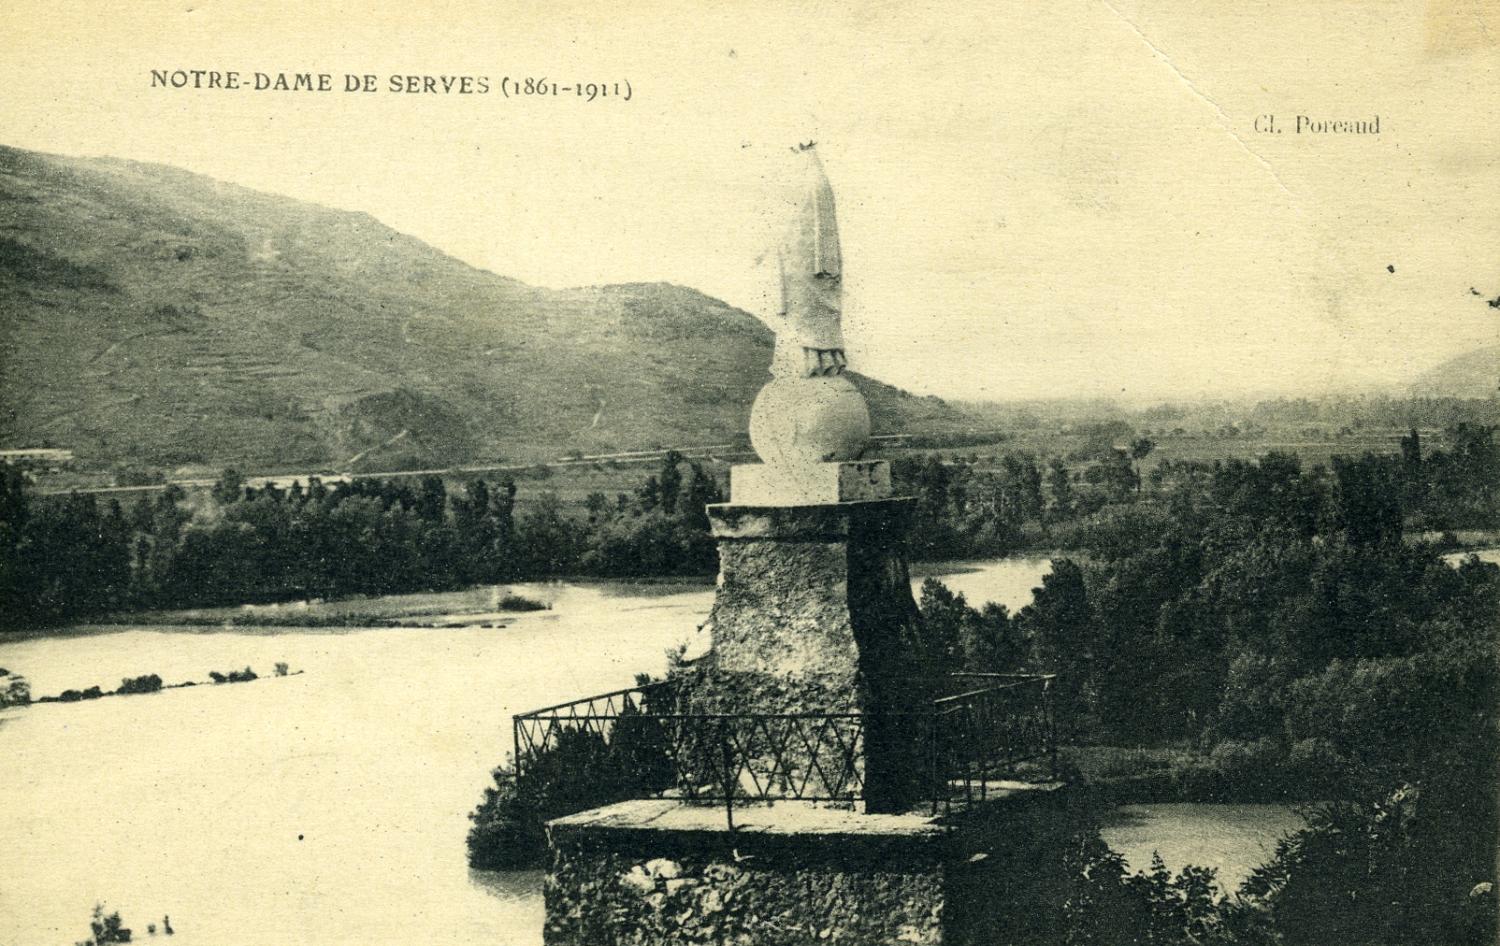 Serves-sur-Rhône (1861-1911)